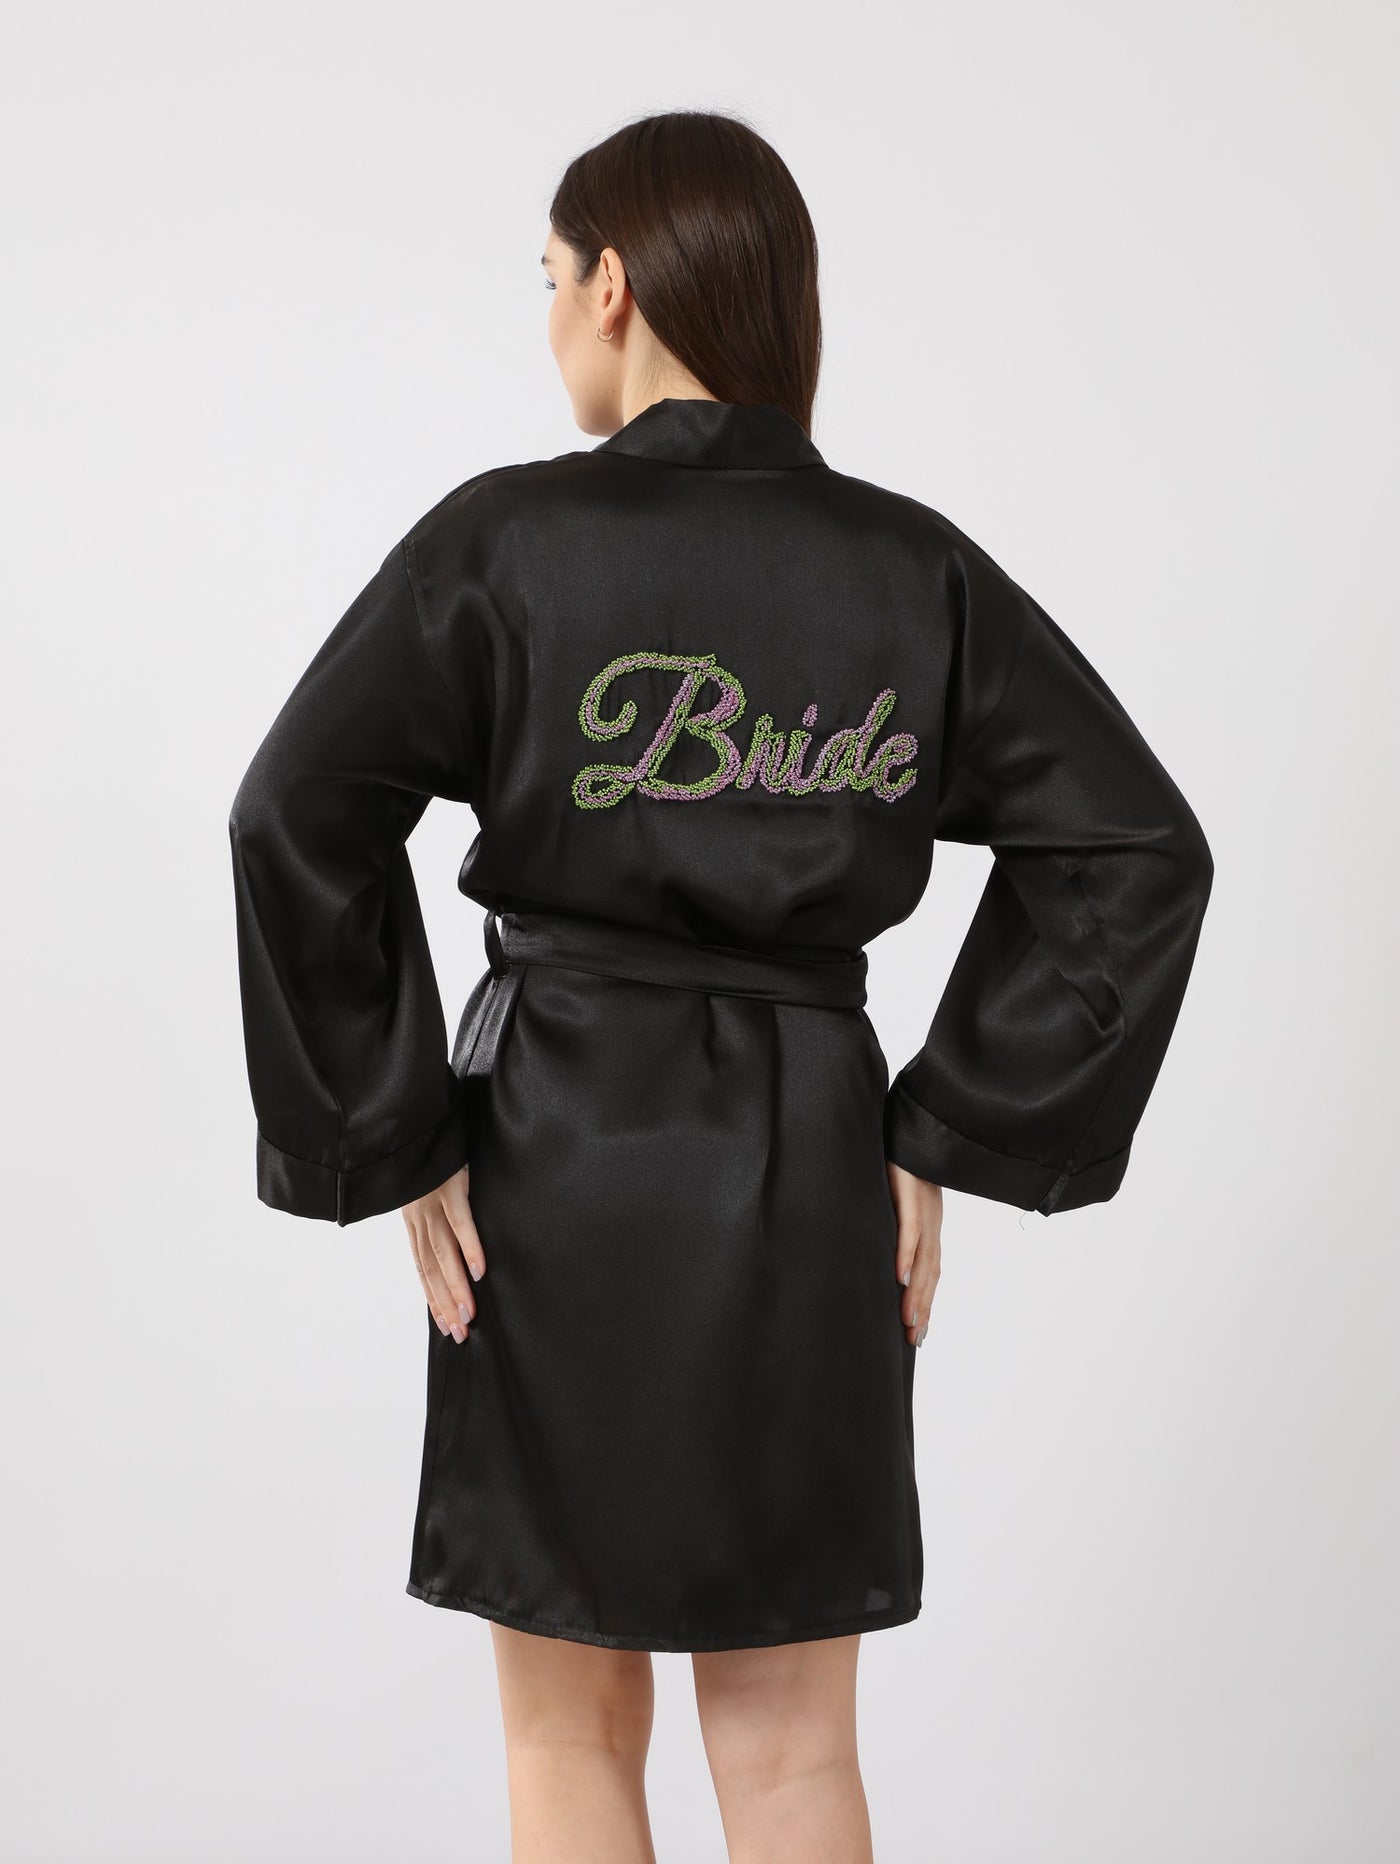 Robe - Bead Embellishment - Bridal